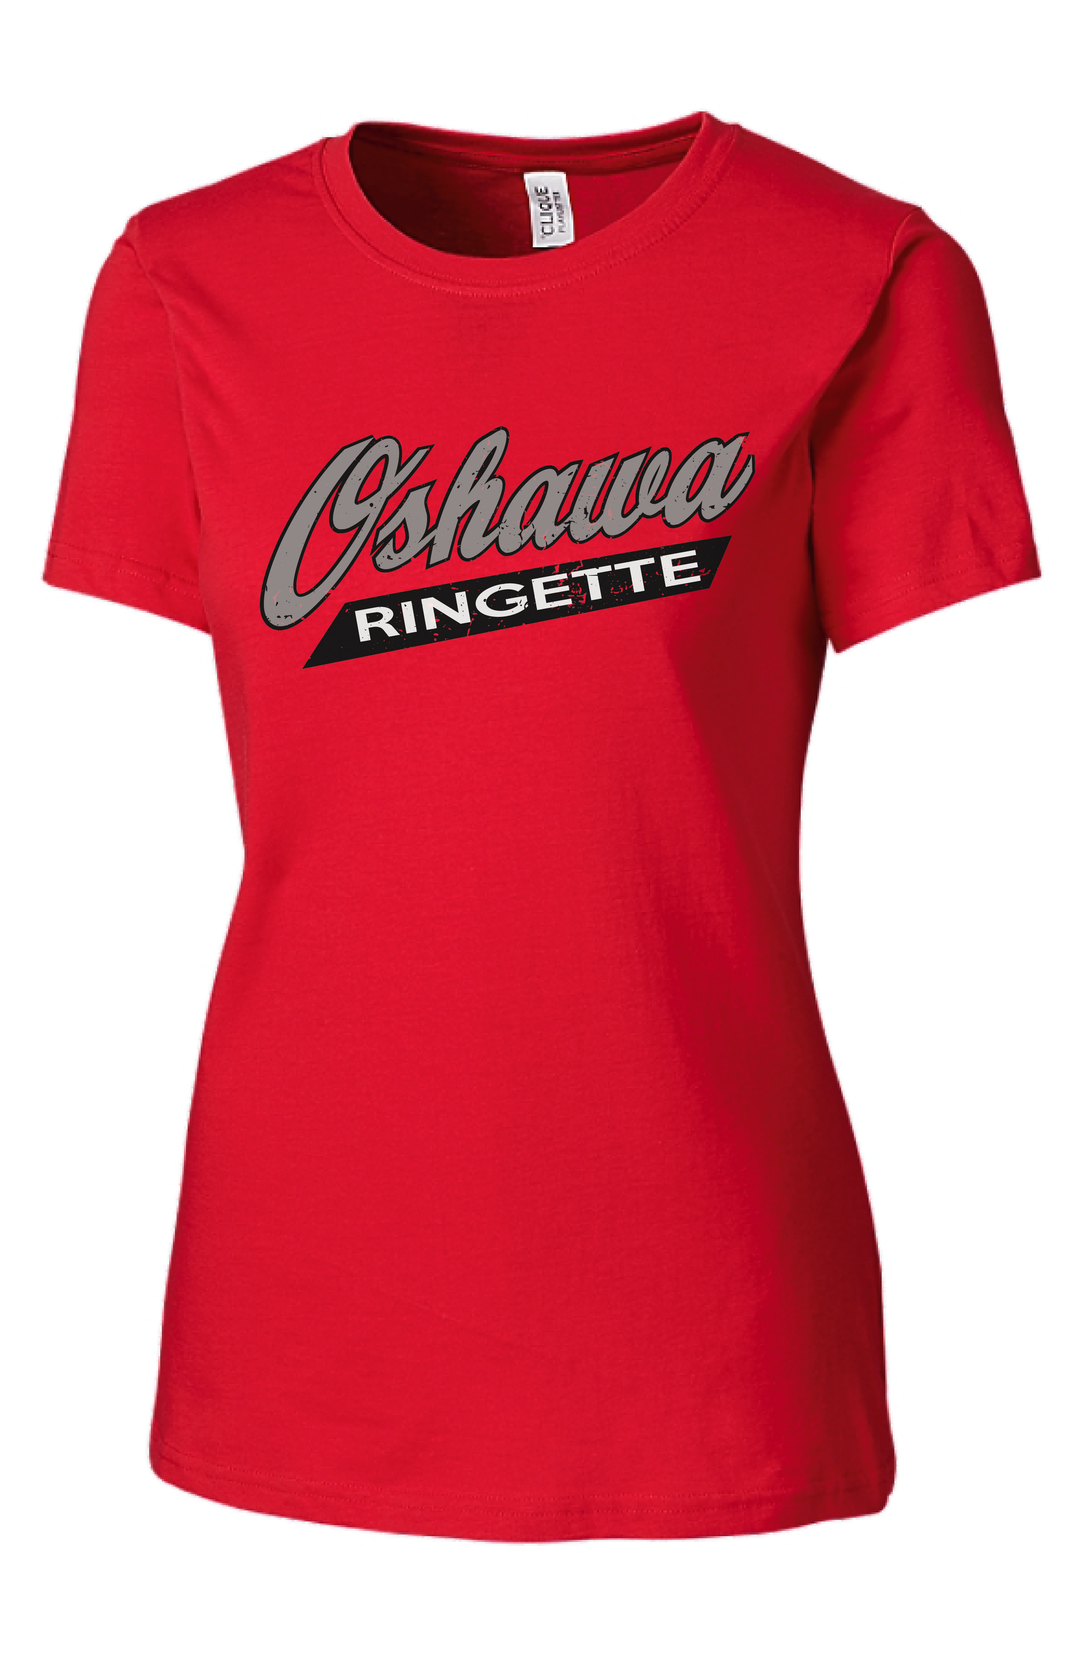 Oshawa Ringette Ladies McLaughlin Short Sleeve Tee